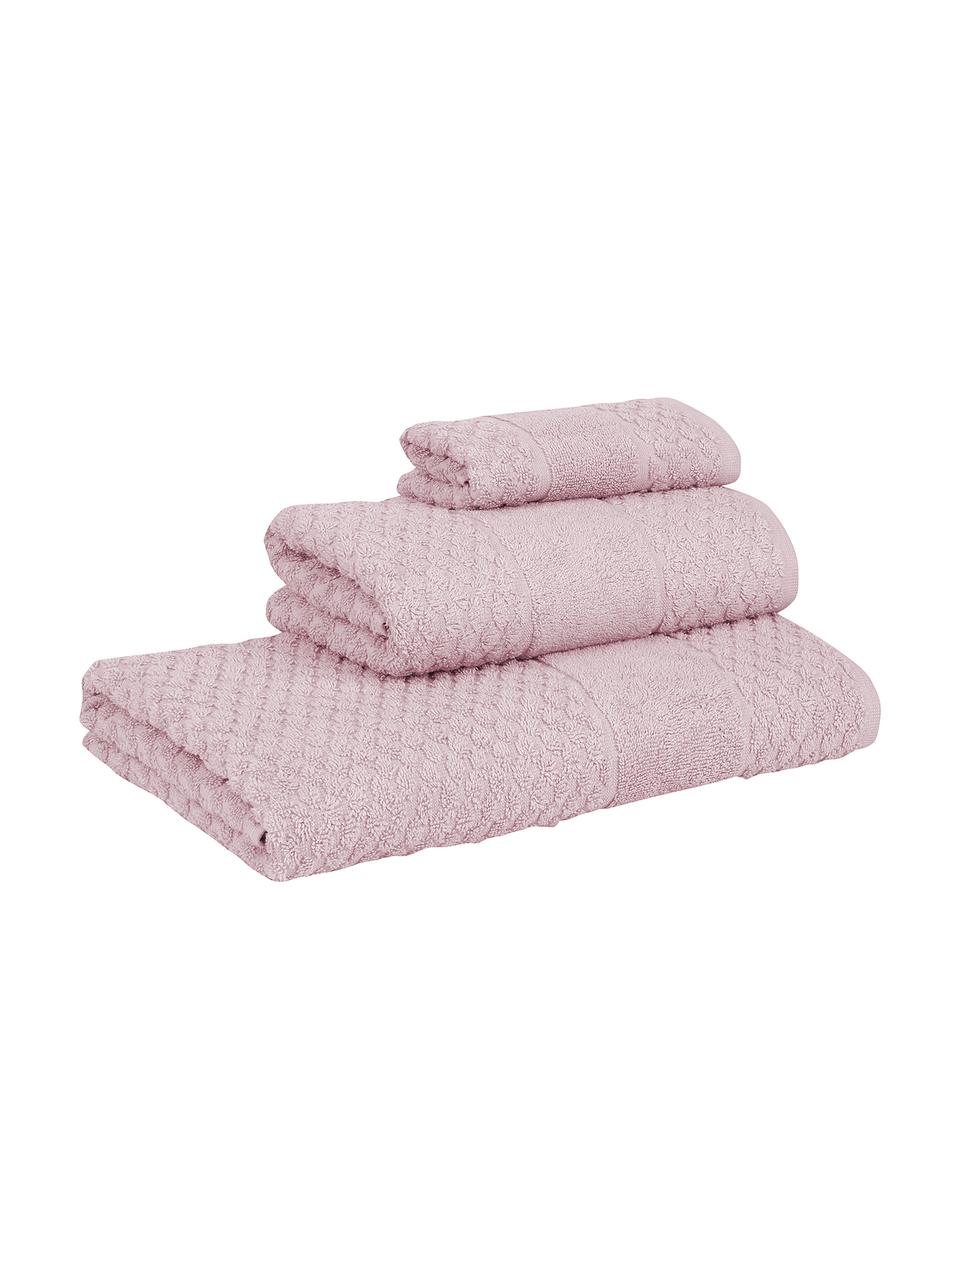 Set 3 asciugamani color rosa cipria con motivo a nido d'ape Katharina, Rosa cipria, Set in varie misure